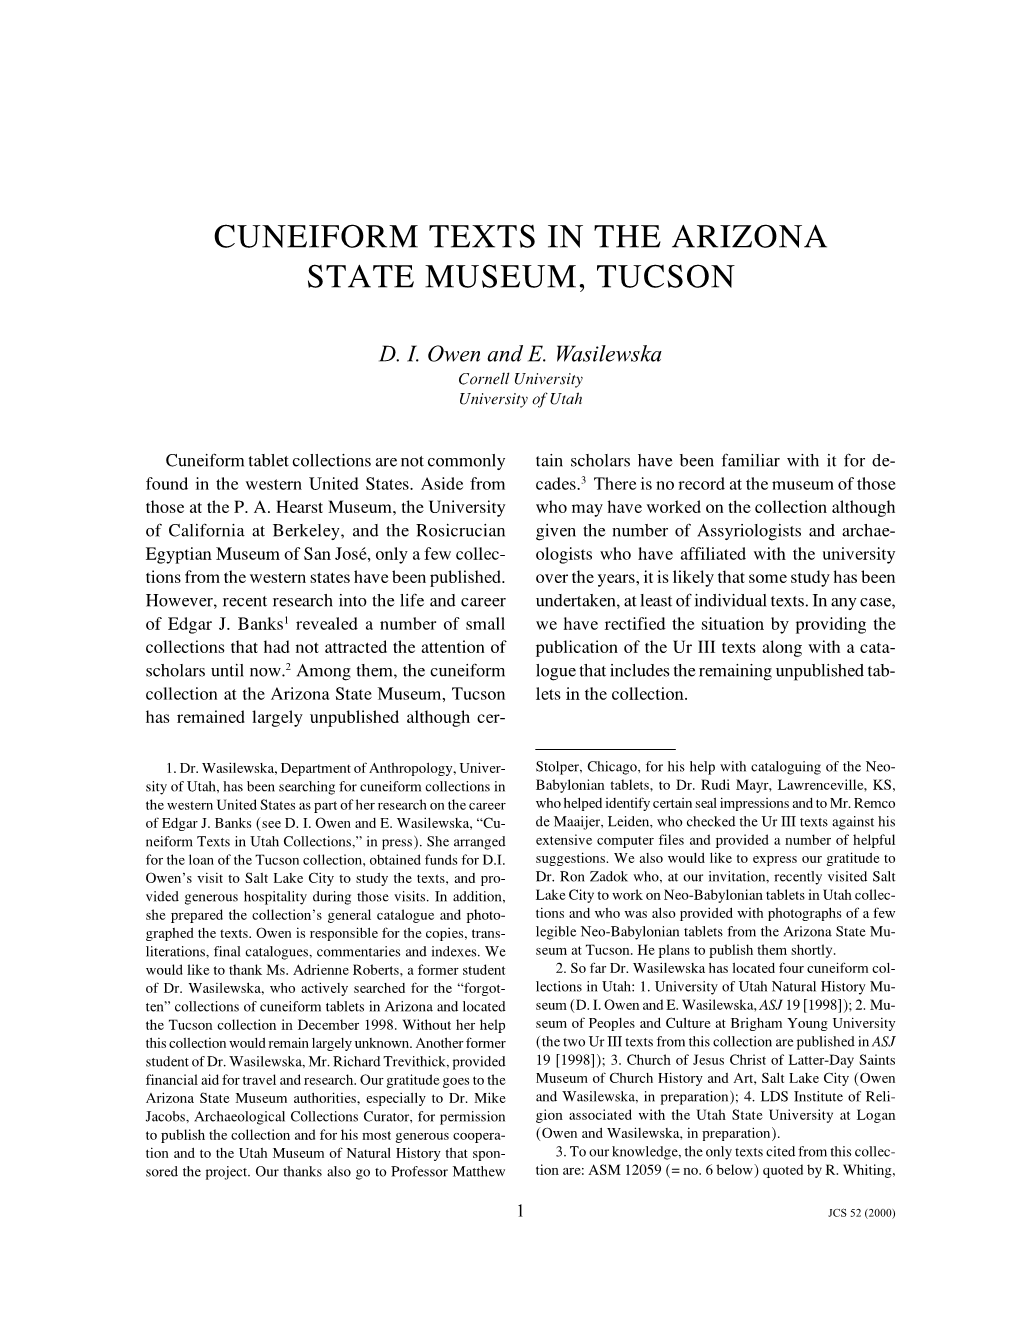 Cuneiform Texts in the Arizona State Museum, Tucson